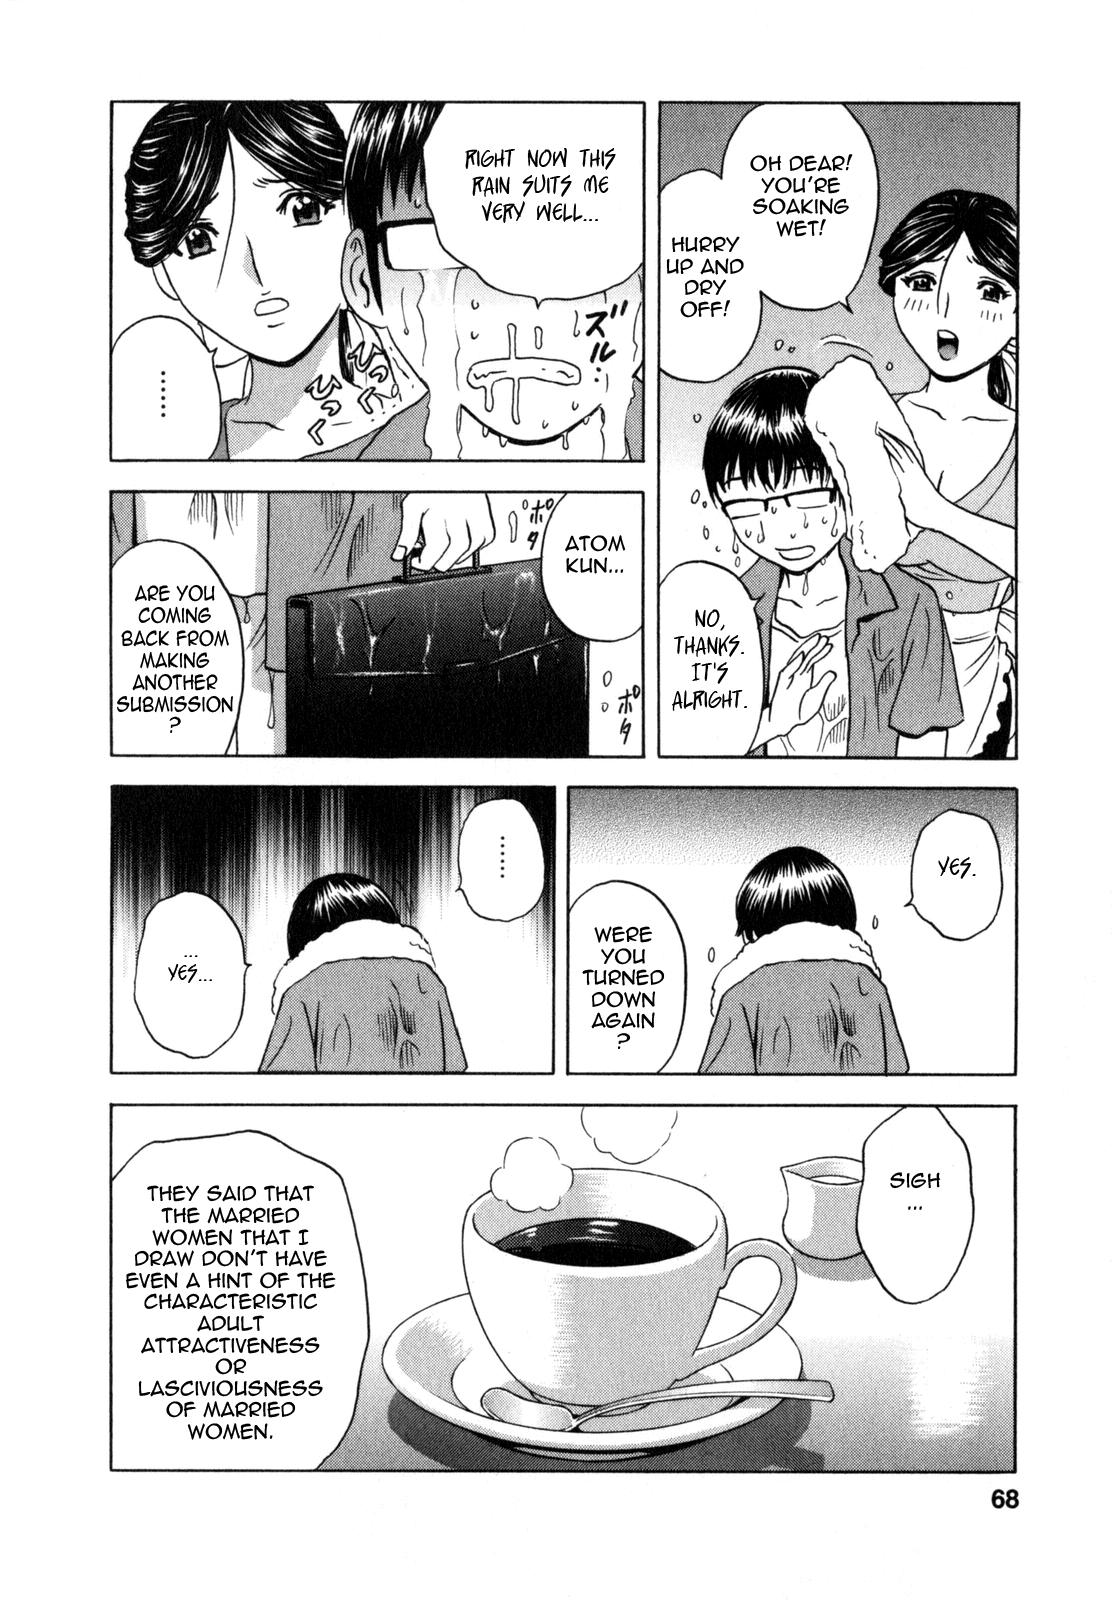 [Hidemaru] Life with Married Women Just Like a Manga 1 - Ch. 1-8 [English] {Tadanohito} 71